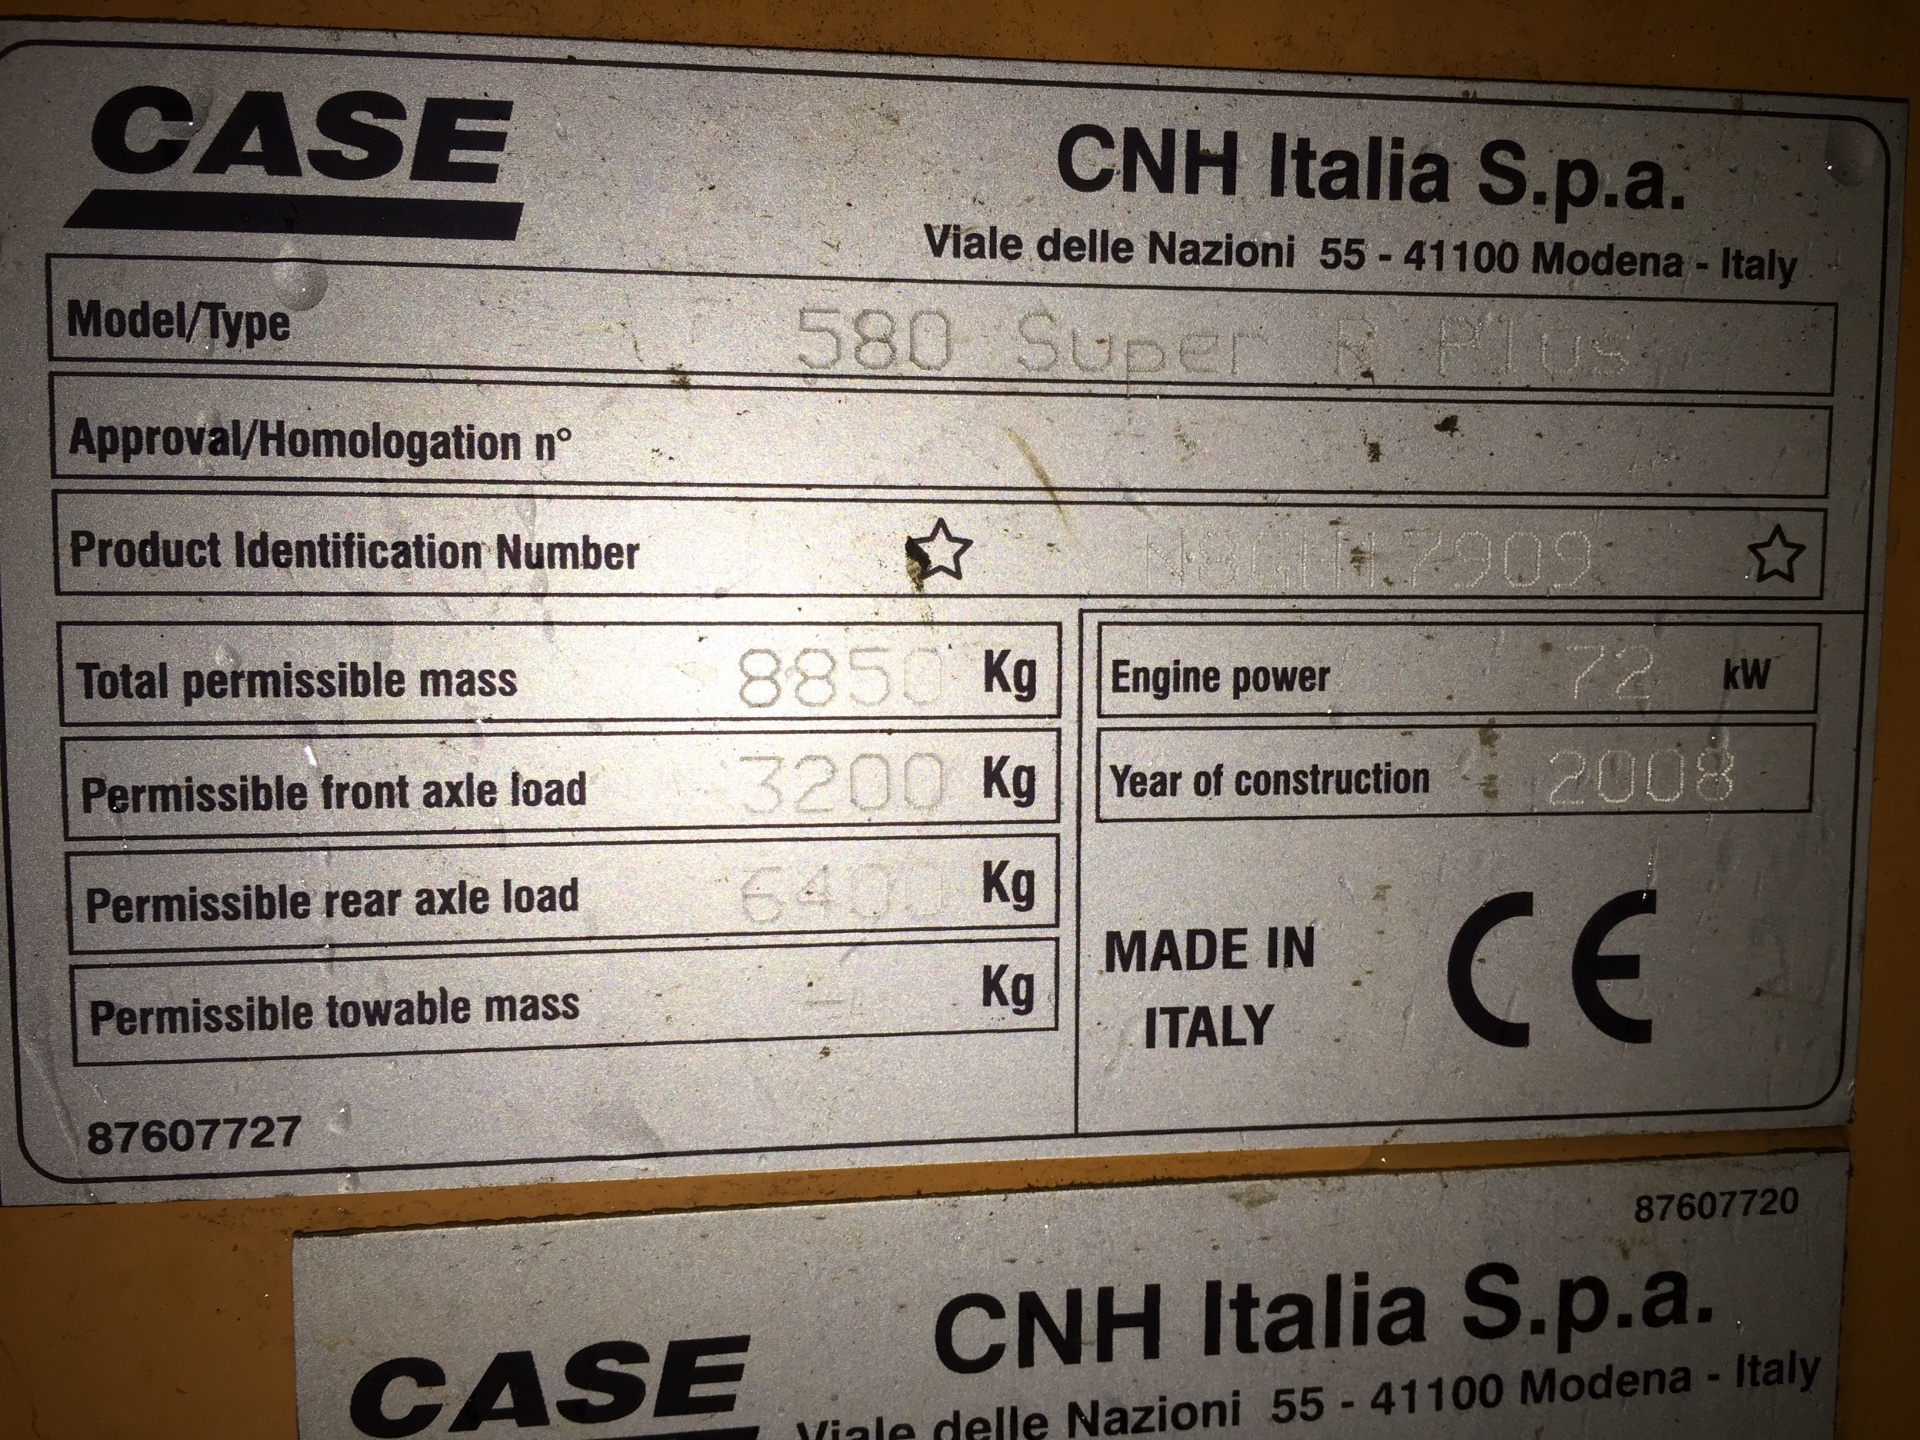 Vin экскаватора. Заводской номер Case 580 le. VIN номер Case 580. Номер на раме погрузчика Case.